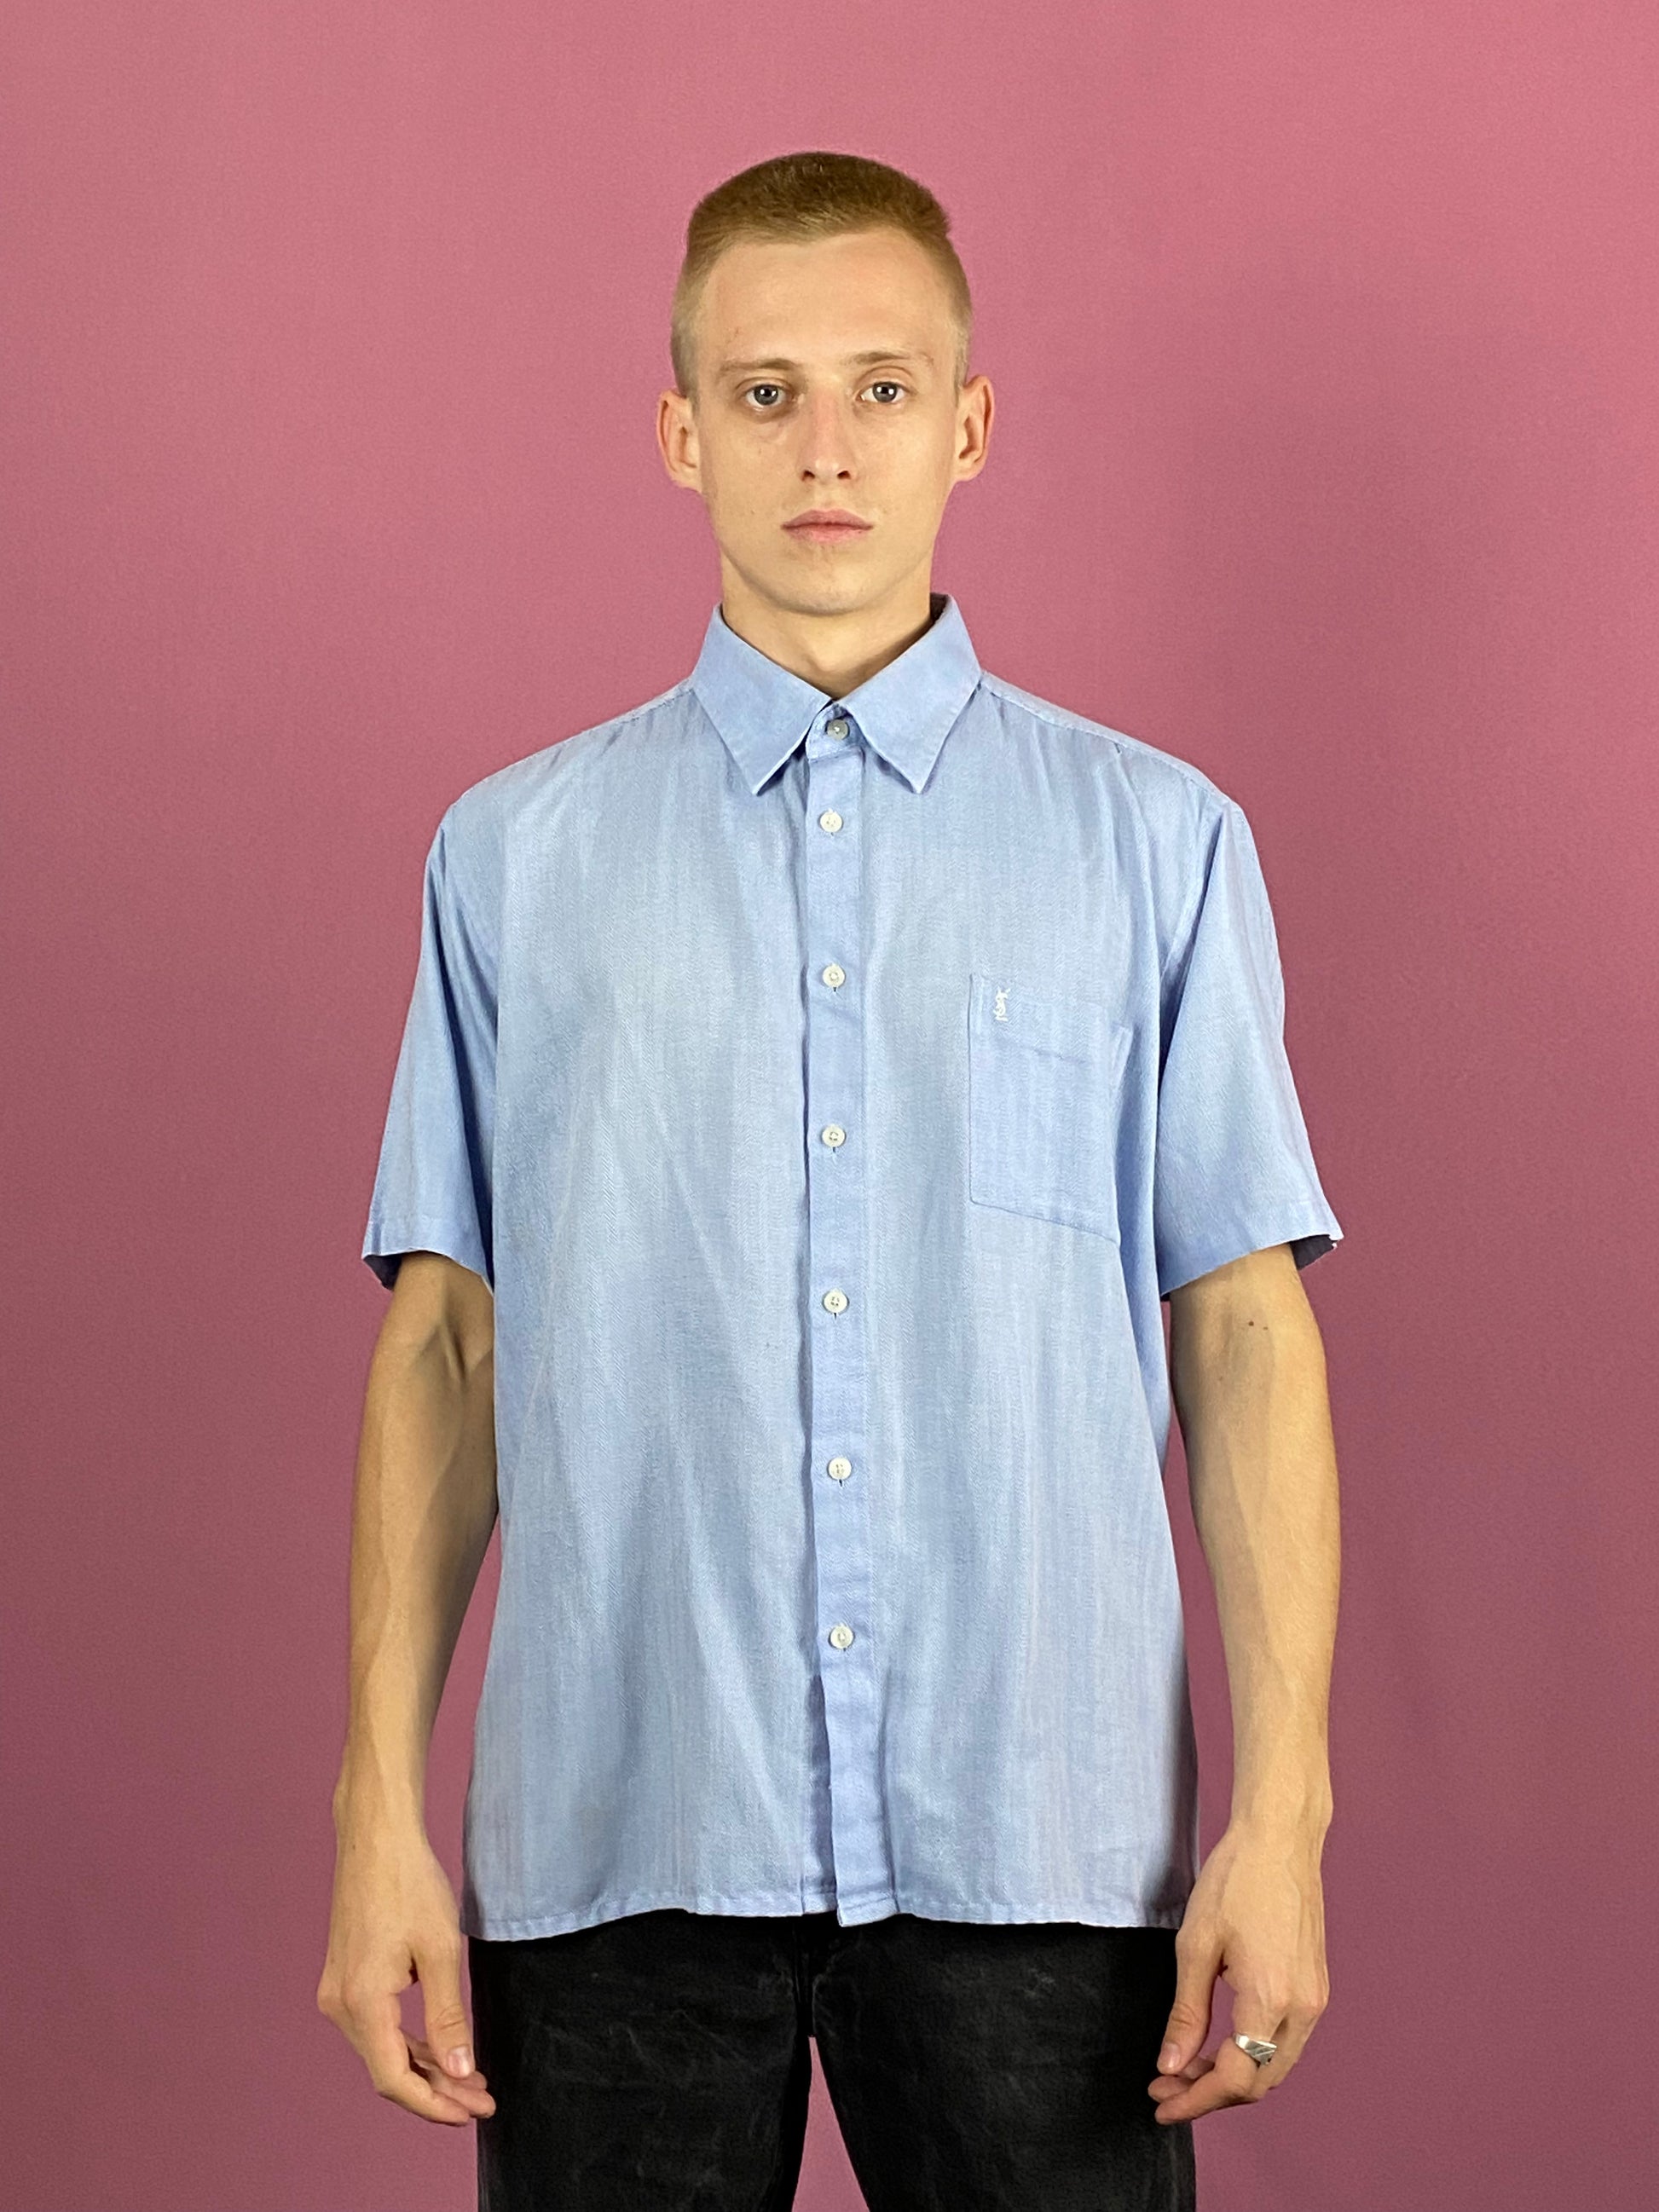 Yves Saint Laurent Vintage Men's Short Sleeve Shirt - XL Blue